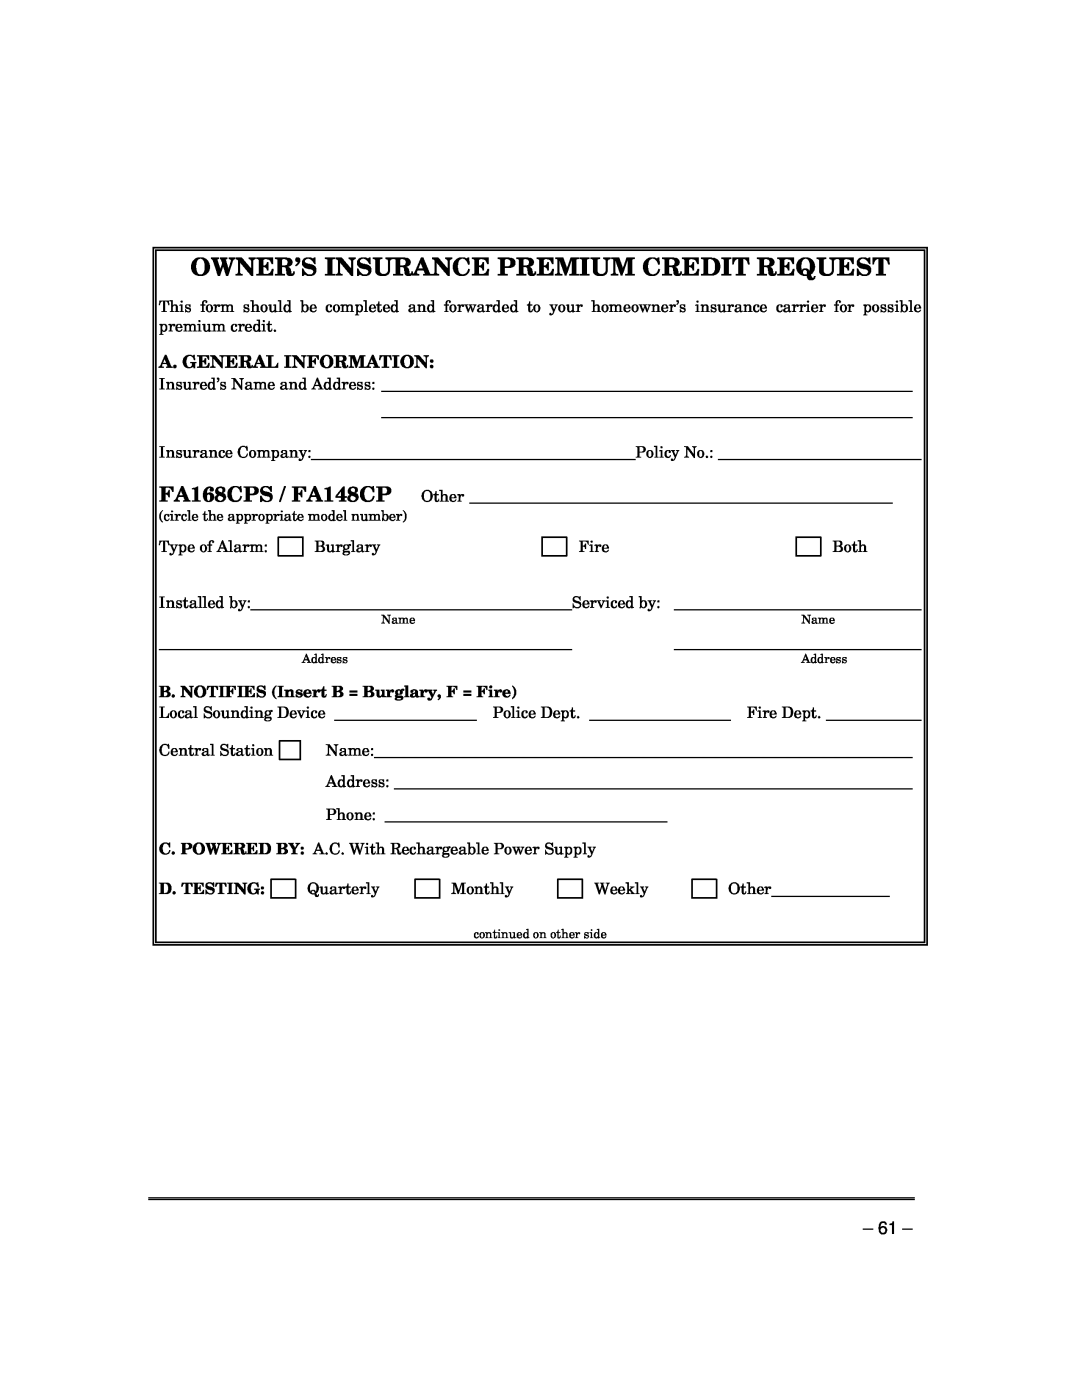 Garmin manual Owner’S Insurance Premium Credit Request, FA168CPS / FA148CP 